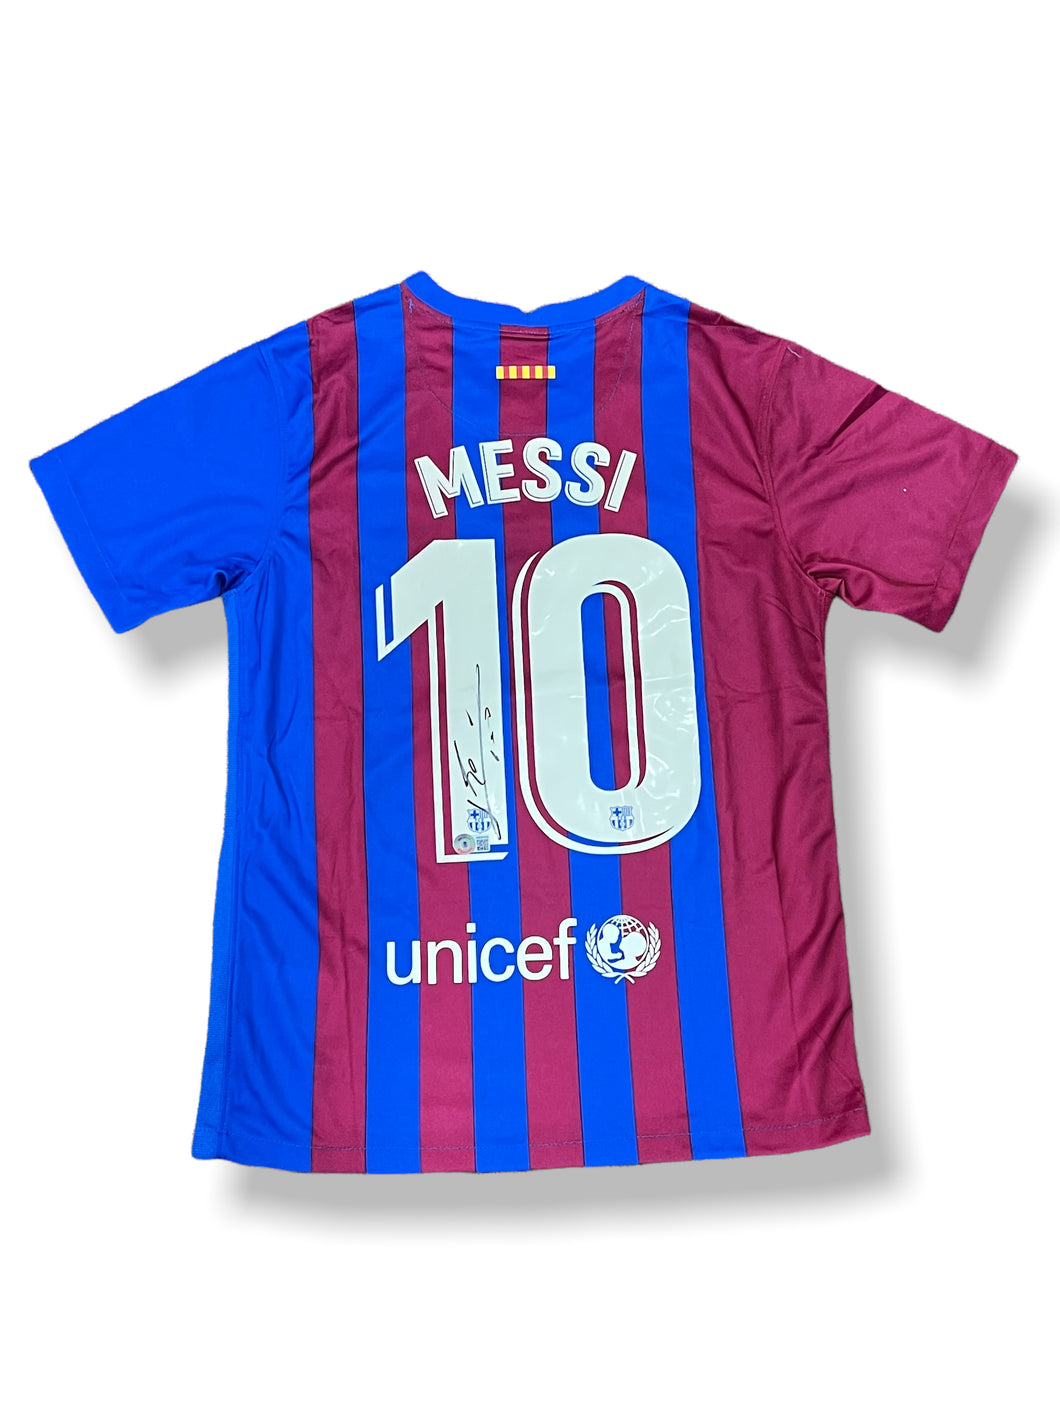 Jersey / Barcelona / Lionel Messi